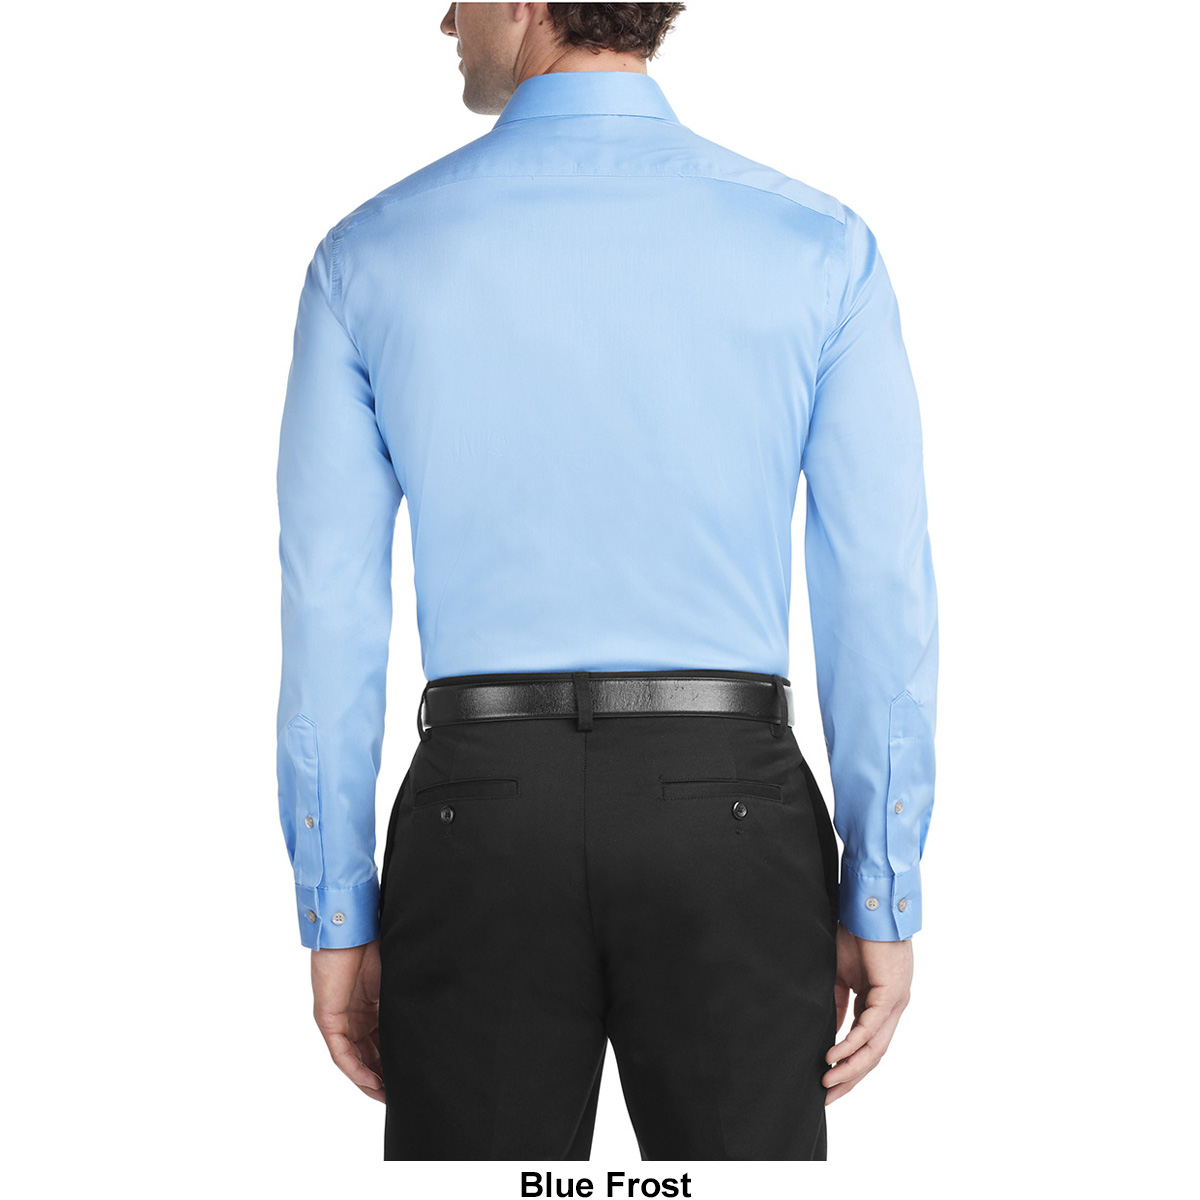 Mens Van Heusen(R) Ultra Slim Fit Dress Shirt